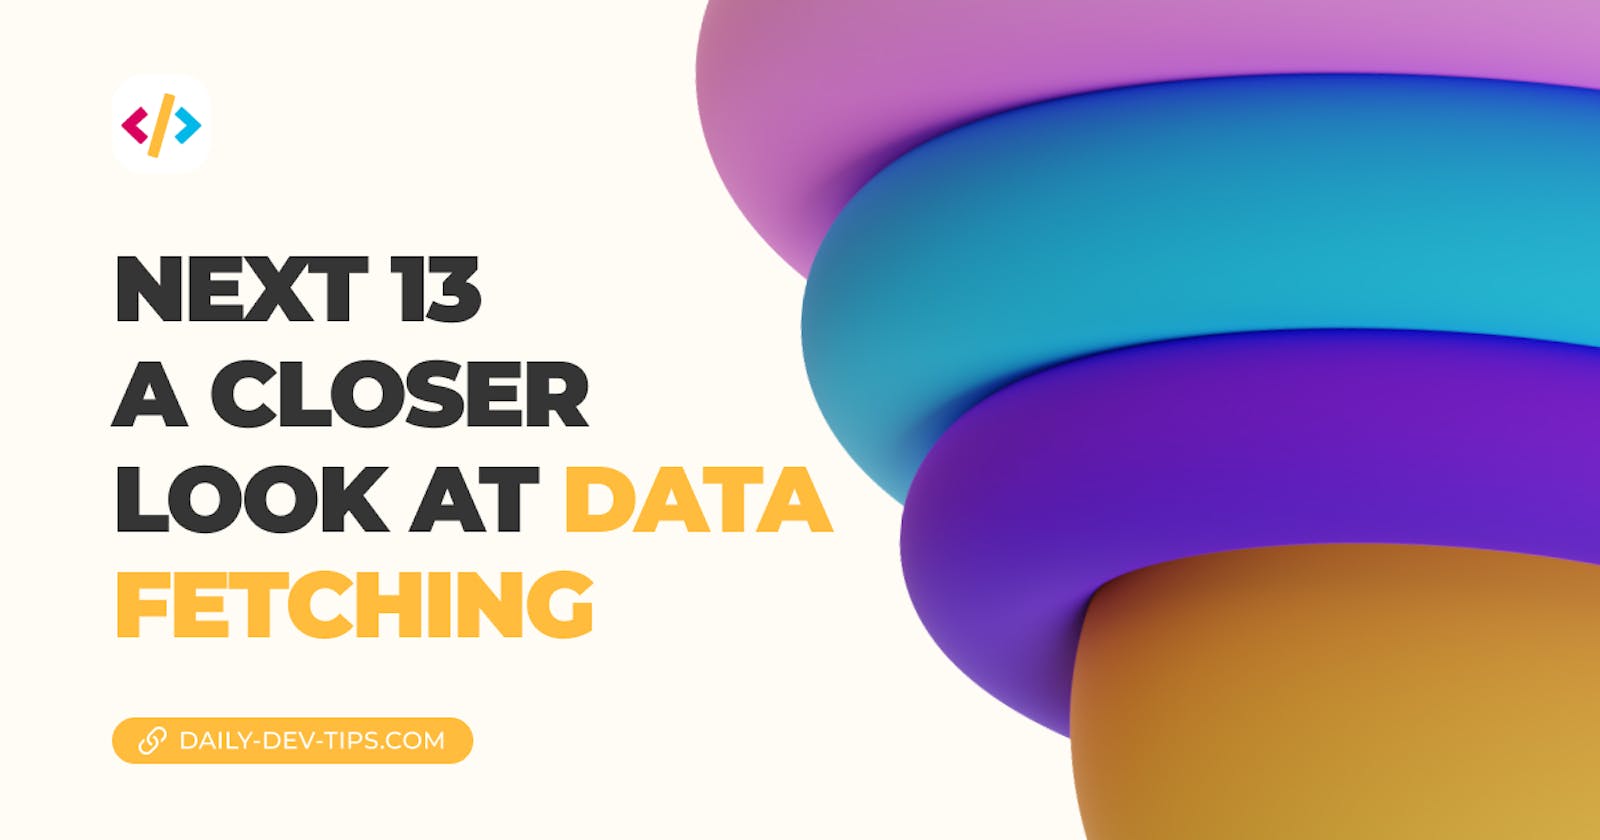 Next 13 - A closer look at data fetching